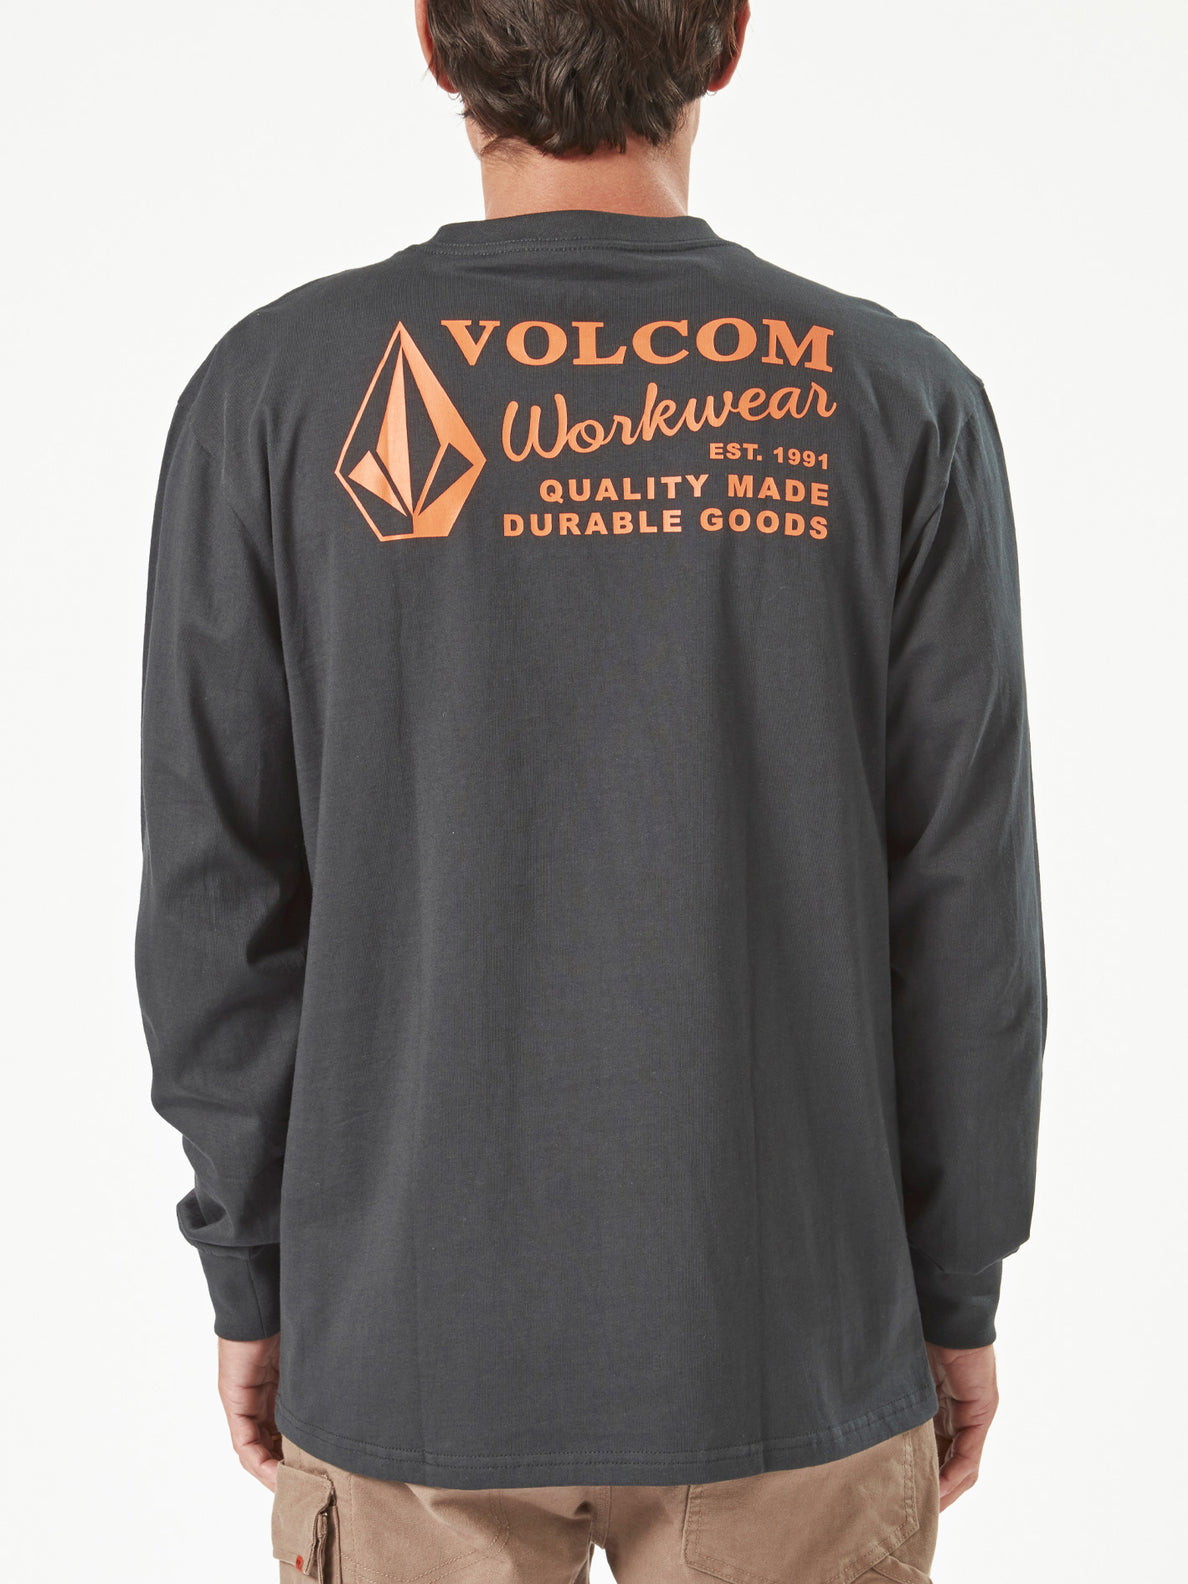 Volcom Work Wear Long Sleeve / Black